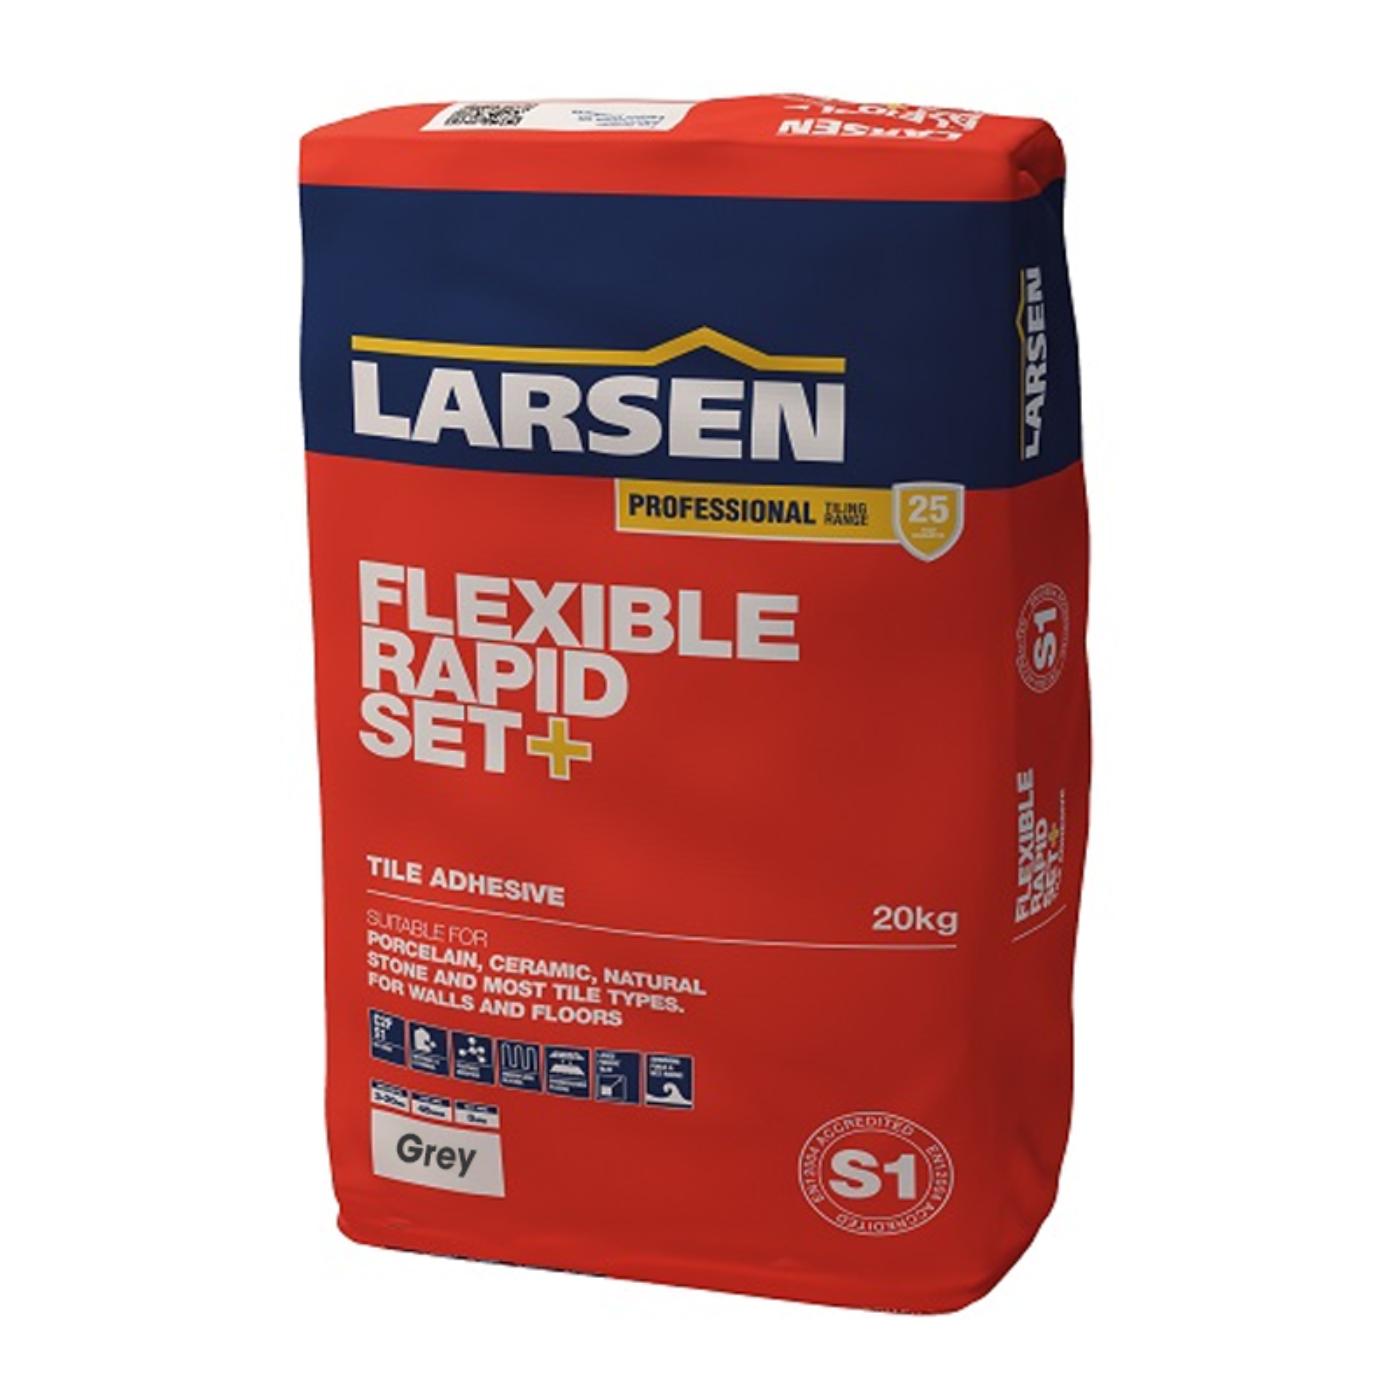 Larsen Professional Flexible Fast Set Adhesive - Grey (20kg)